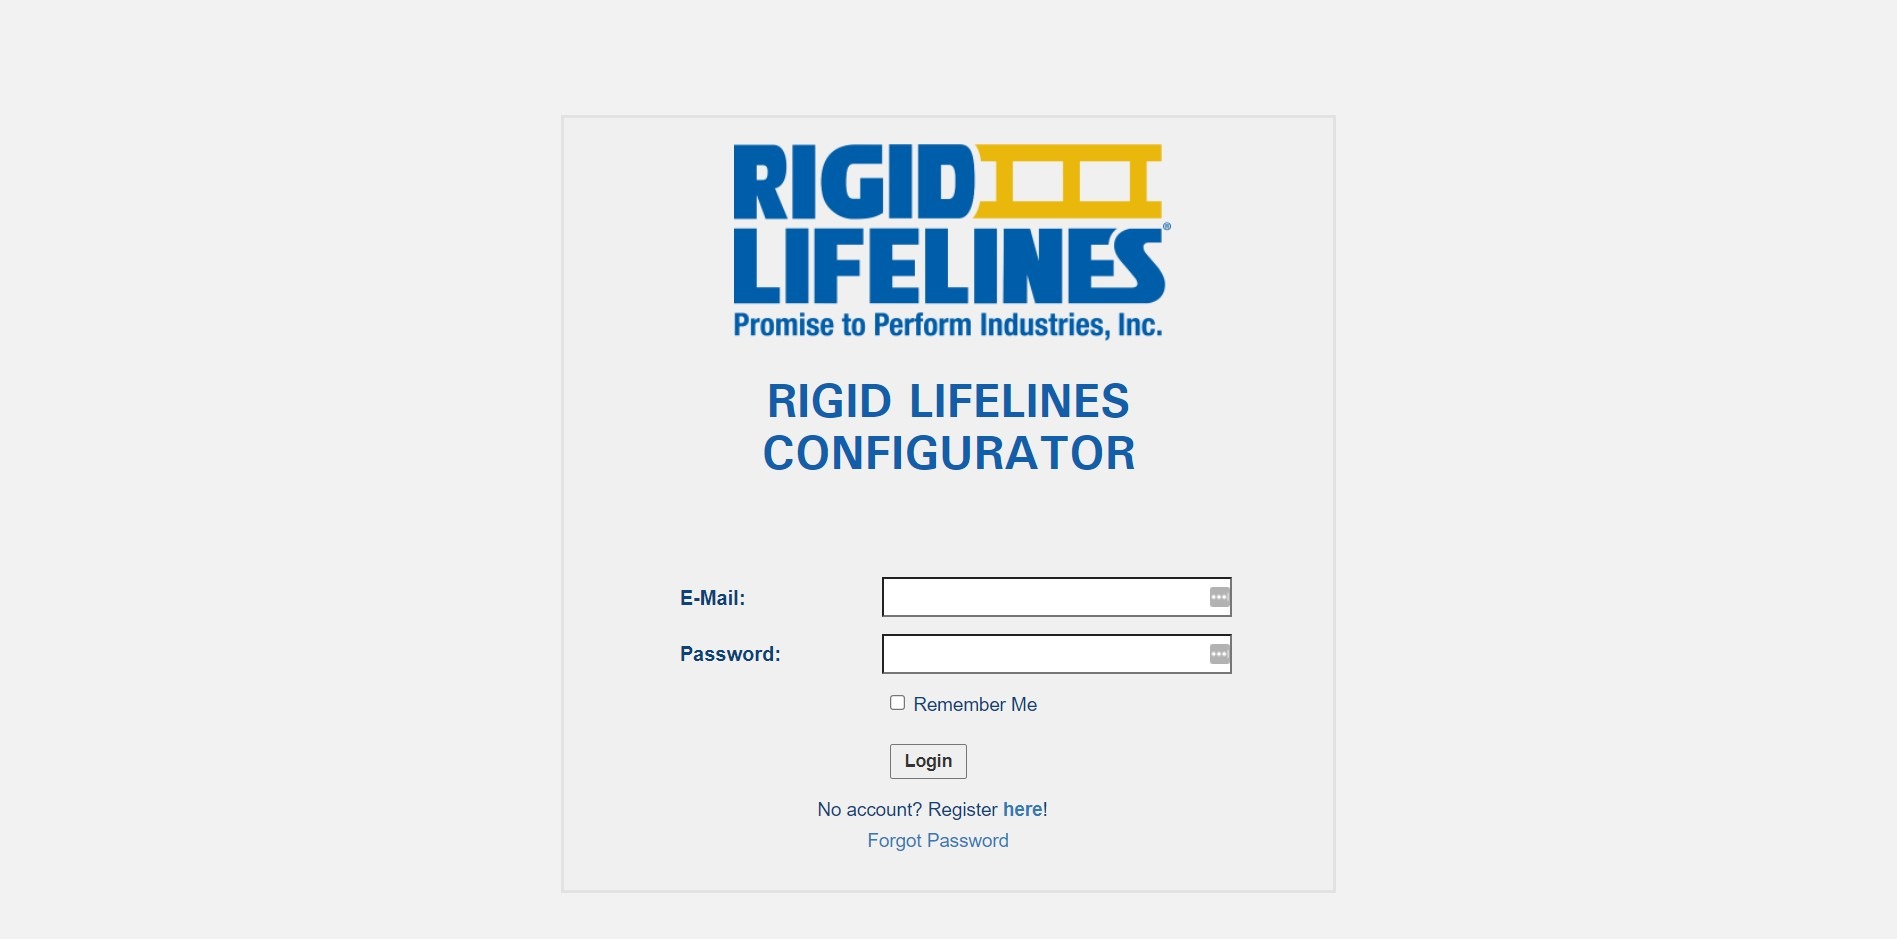 Rigid Lifelines Configurator Slide 1